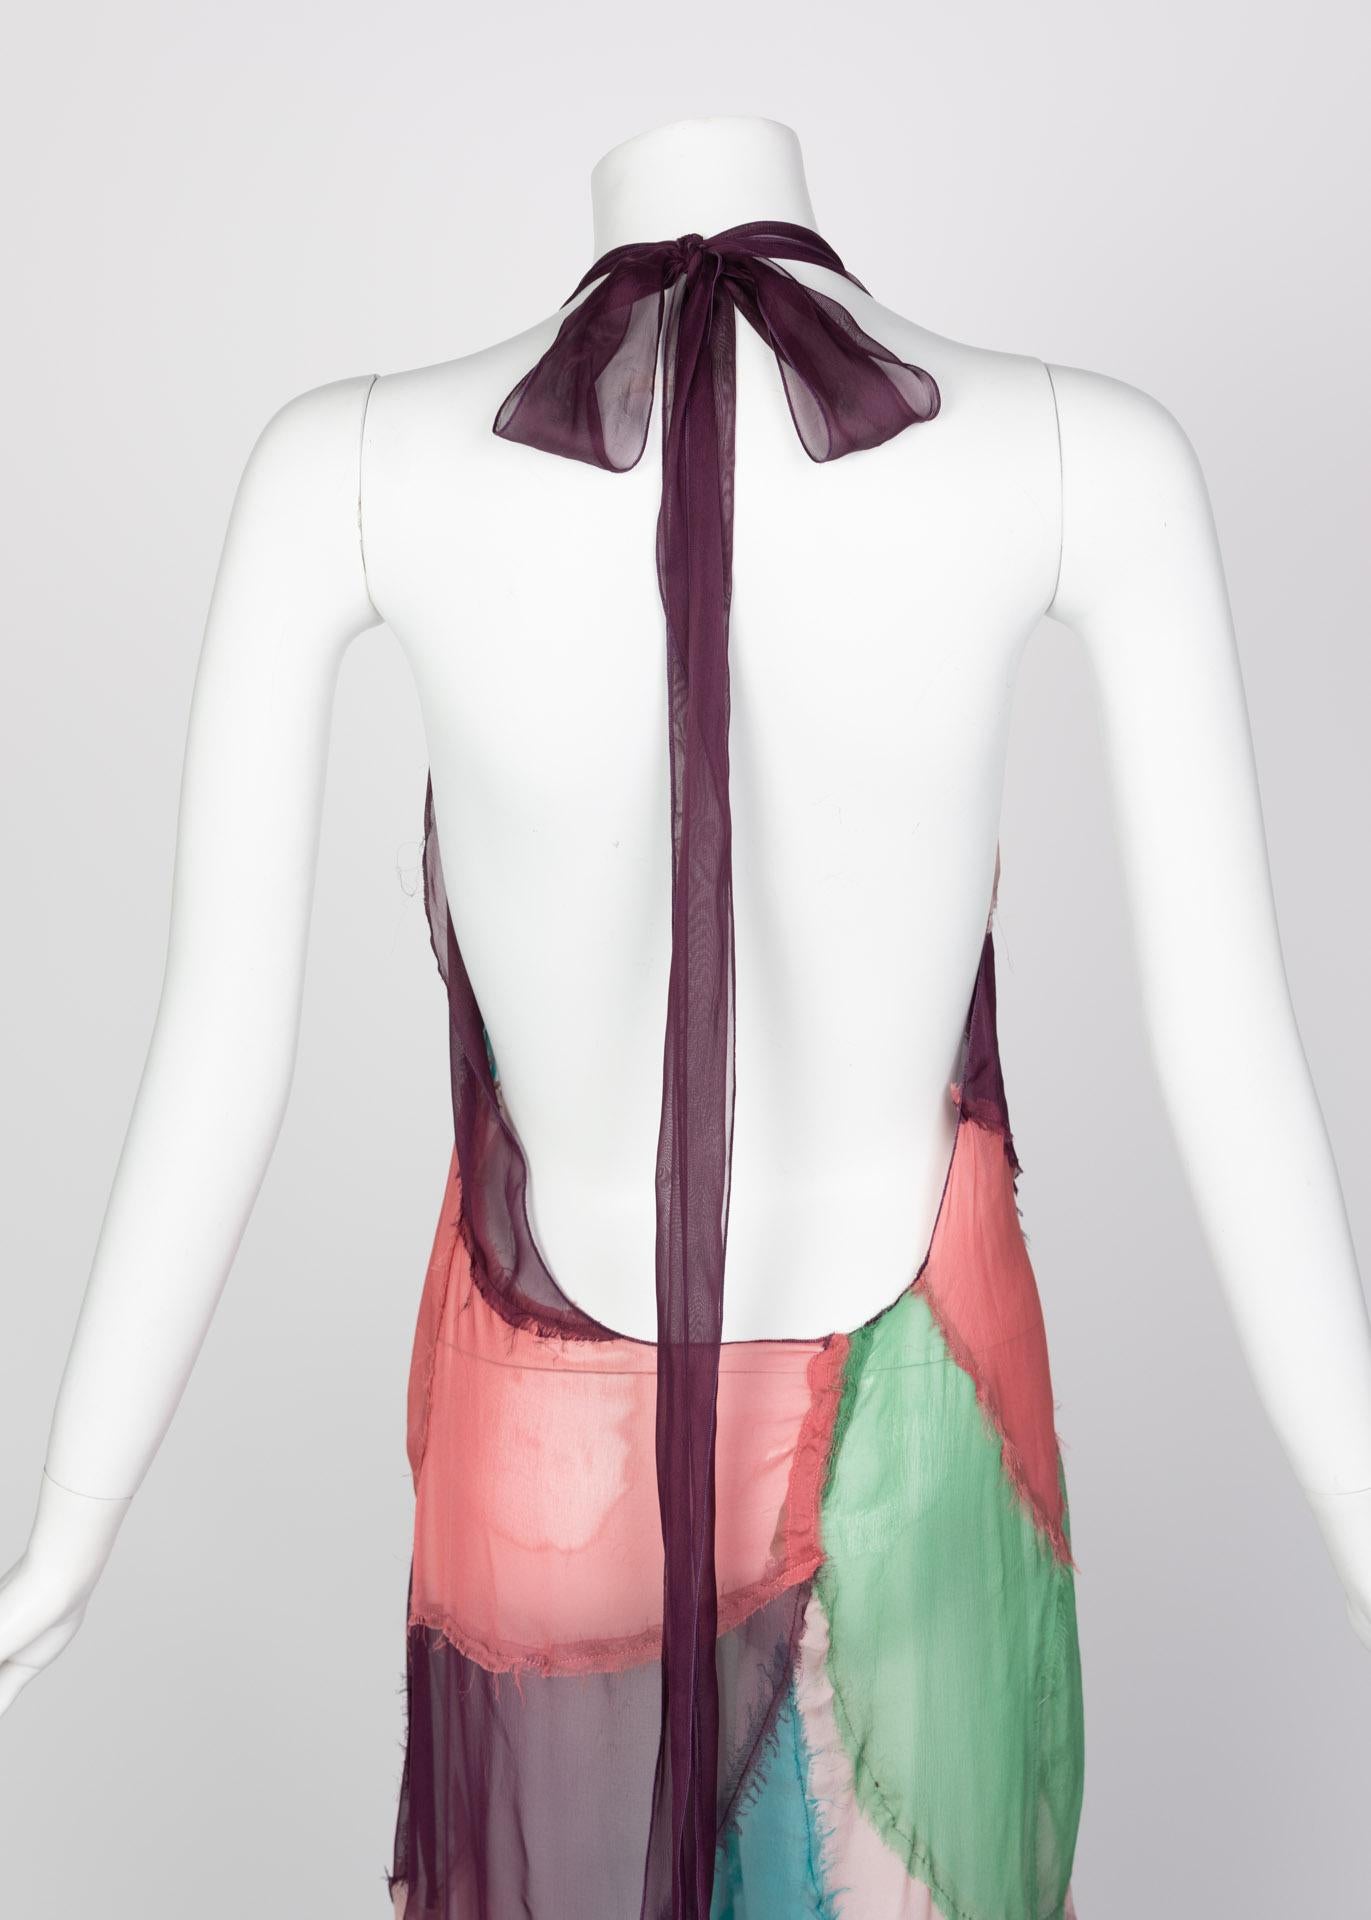 Alberta Ferretti Silk Chiffon Patchwork Open back Halter Gown, 2005 For Sale 4